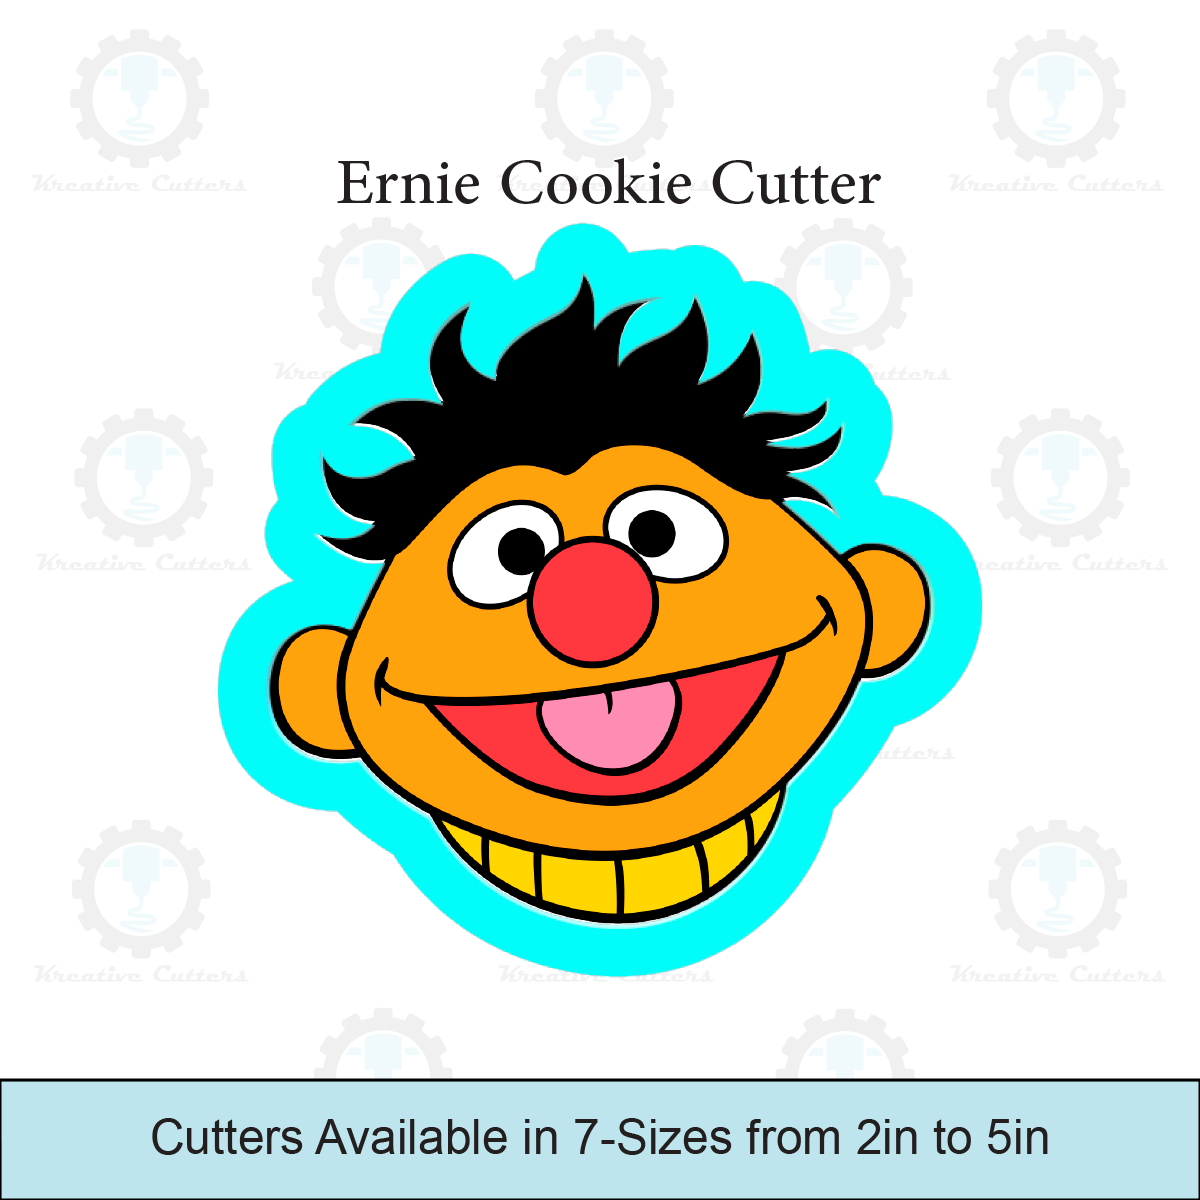 Ernie Cookie Cutter